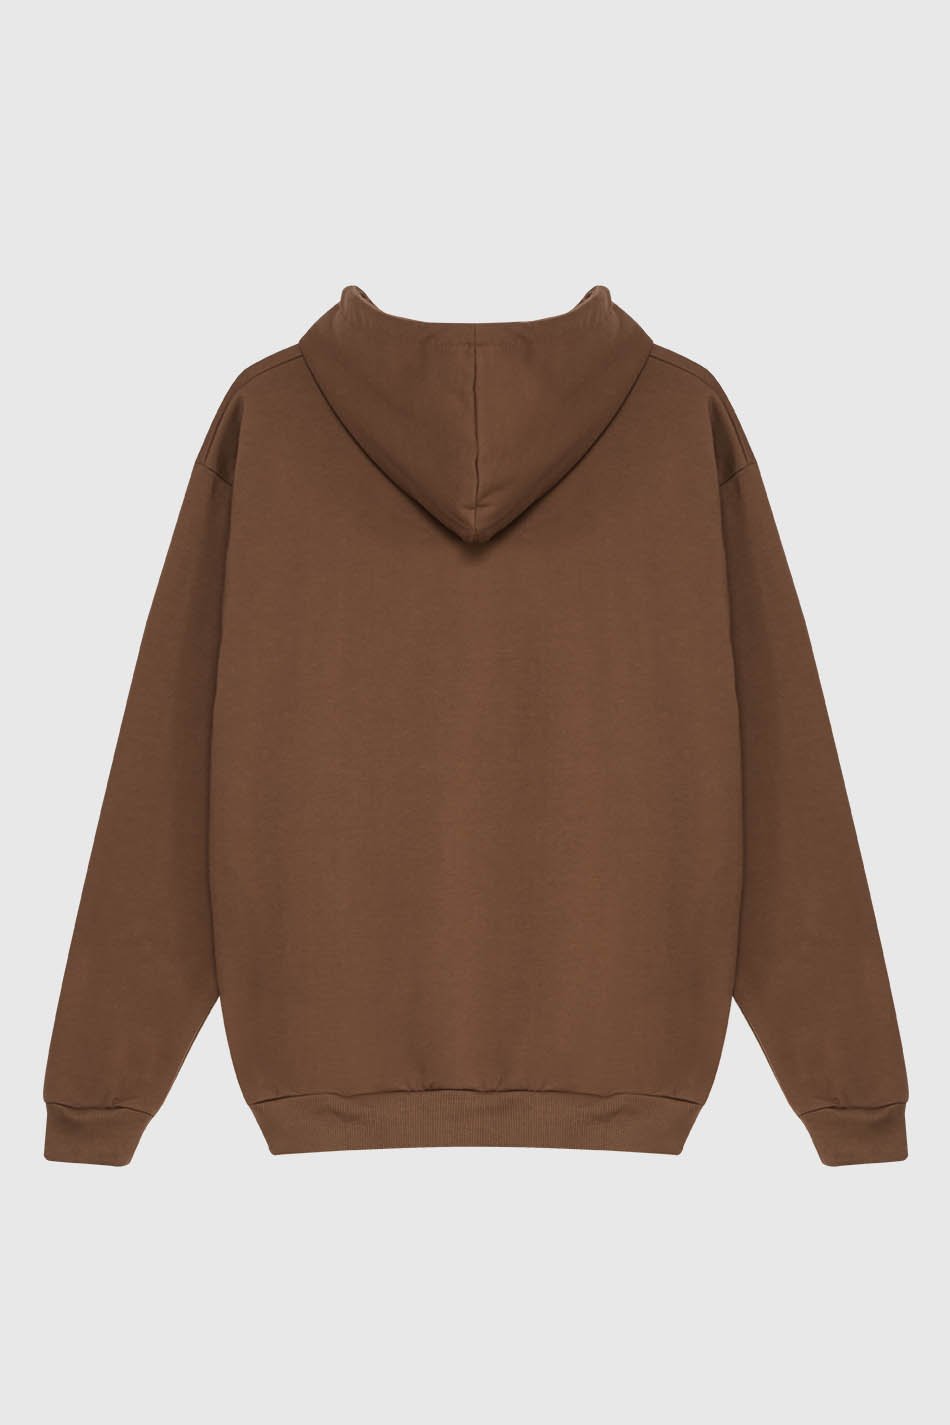 Brown C'est La Vie Sweatshirt